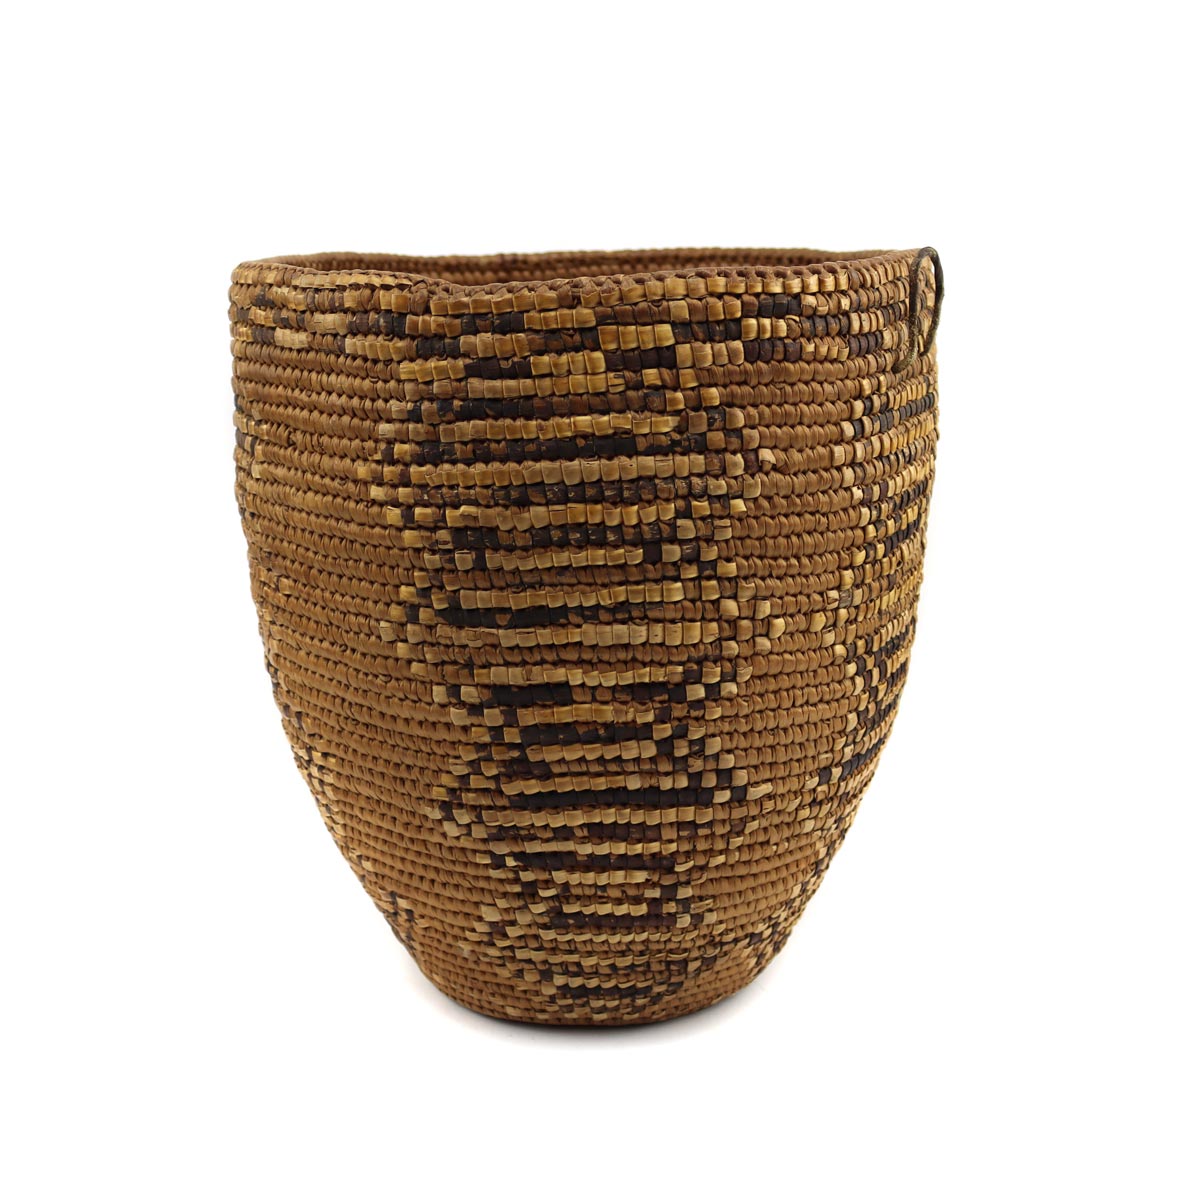 Salish Polychrome Burden Basket c. 1890s, 12" x 13.5" x 11.25" (SK92306-1222-001)1
